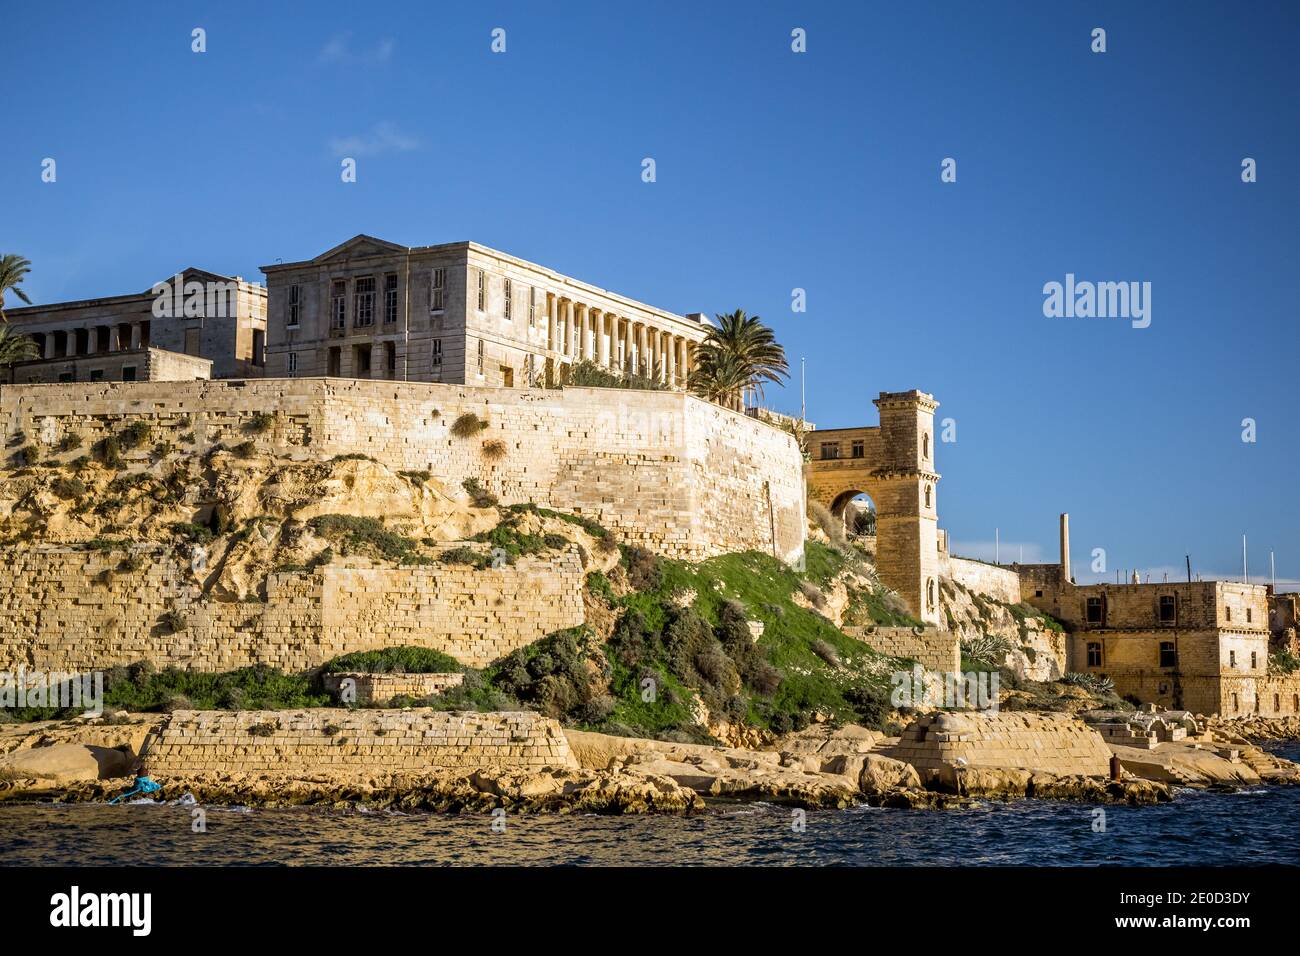 Historic waterfront buildings on Grand Harbour waterside, Valletta, Malta. Stock Photo